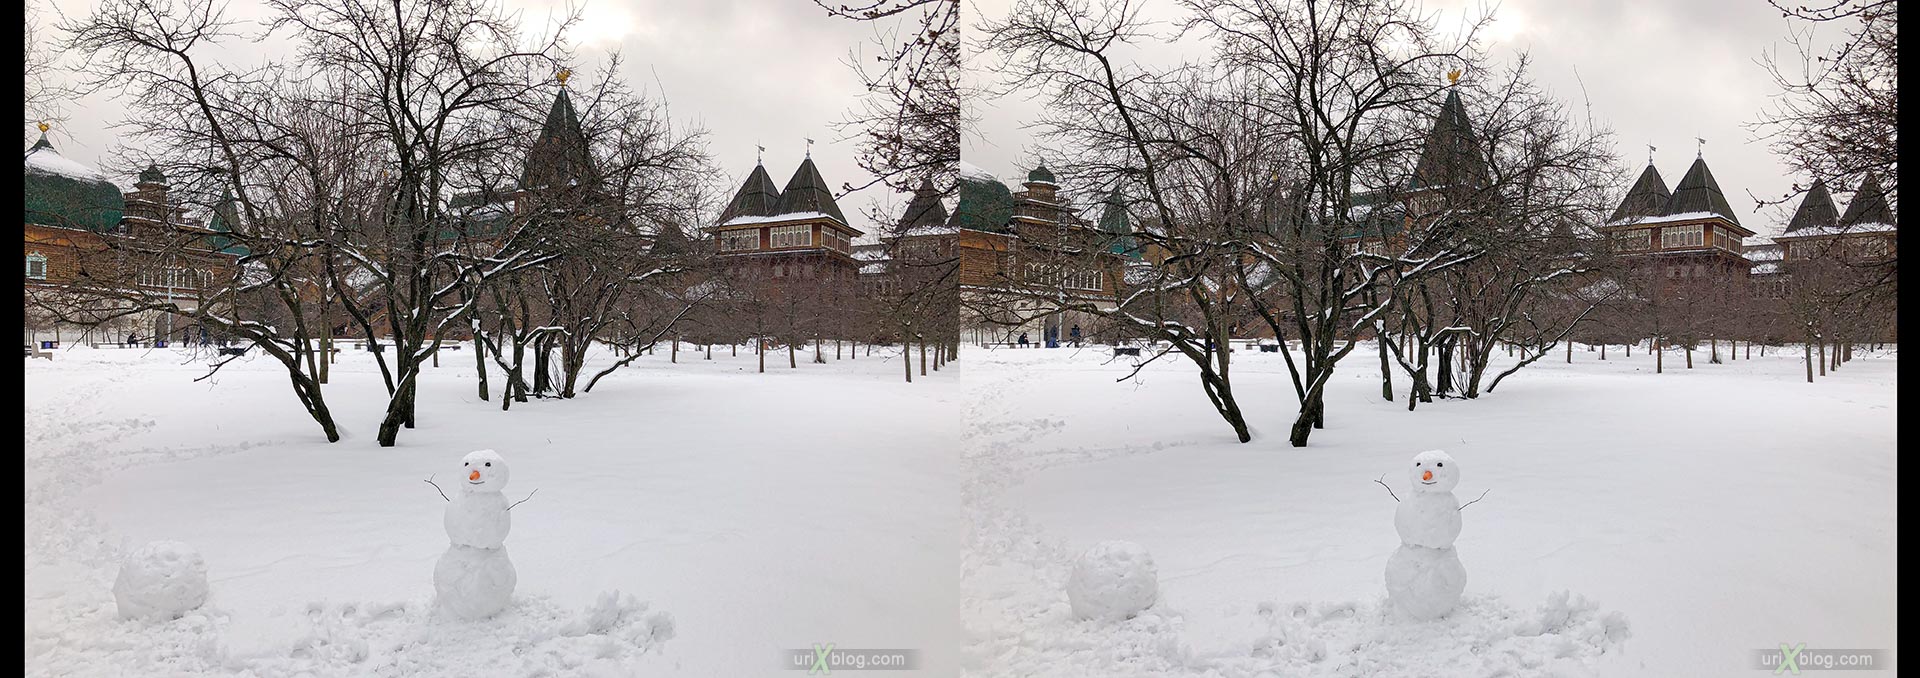 snowman, Kolomenskoye park, winter, snow, Russia, 3D, stereo pair, cross-eyed, crossview, cross view stereo pair, stereoscopic